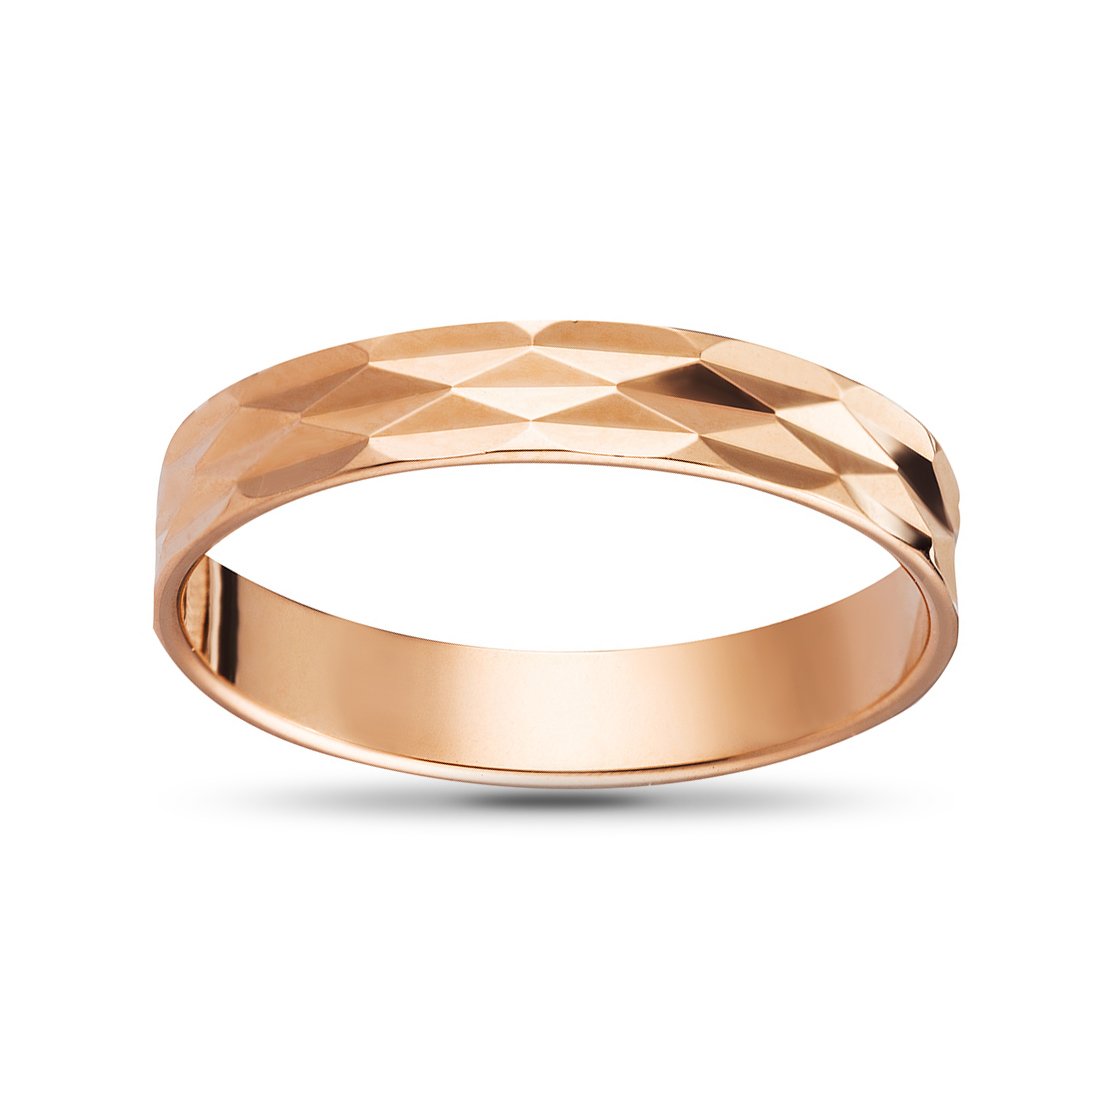 Золотое кольцо с алмазной гранью. Золотое кольцо с алмазной огранкой. Кольца с алмазной гранью золотые обручальные. Кольцо с алмазной гранью 585. Обручальное кольцо из золота с алмазной гранью артикул: 110103.